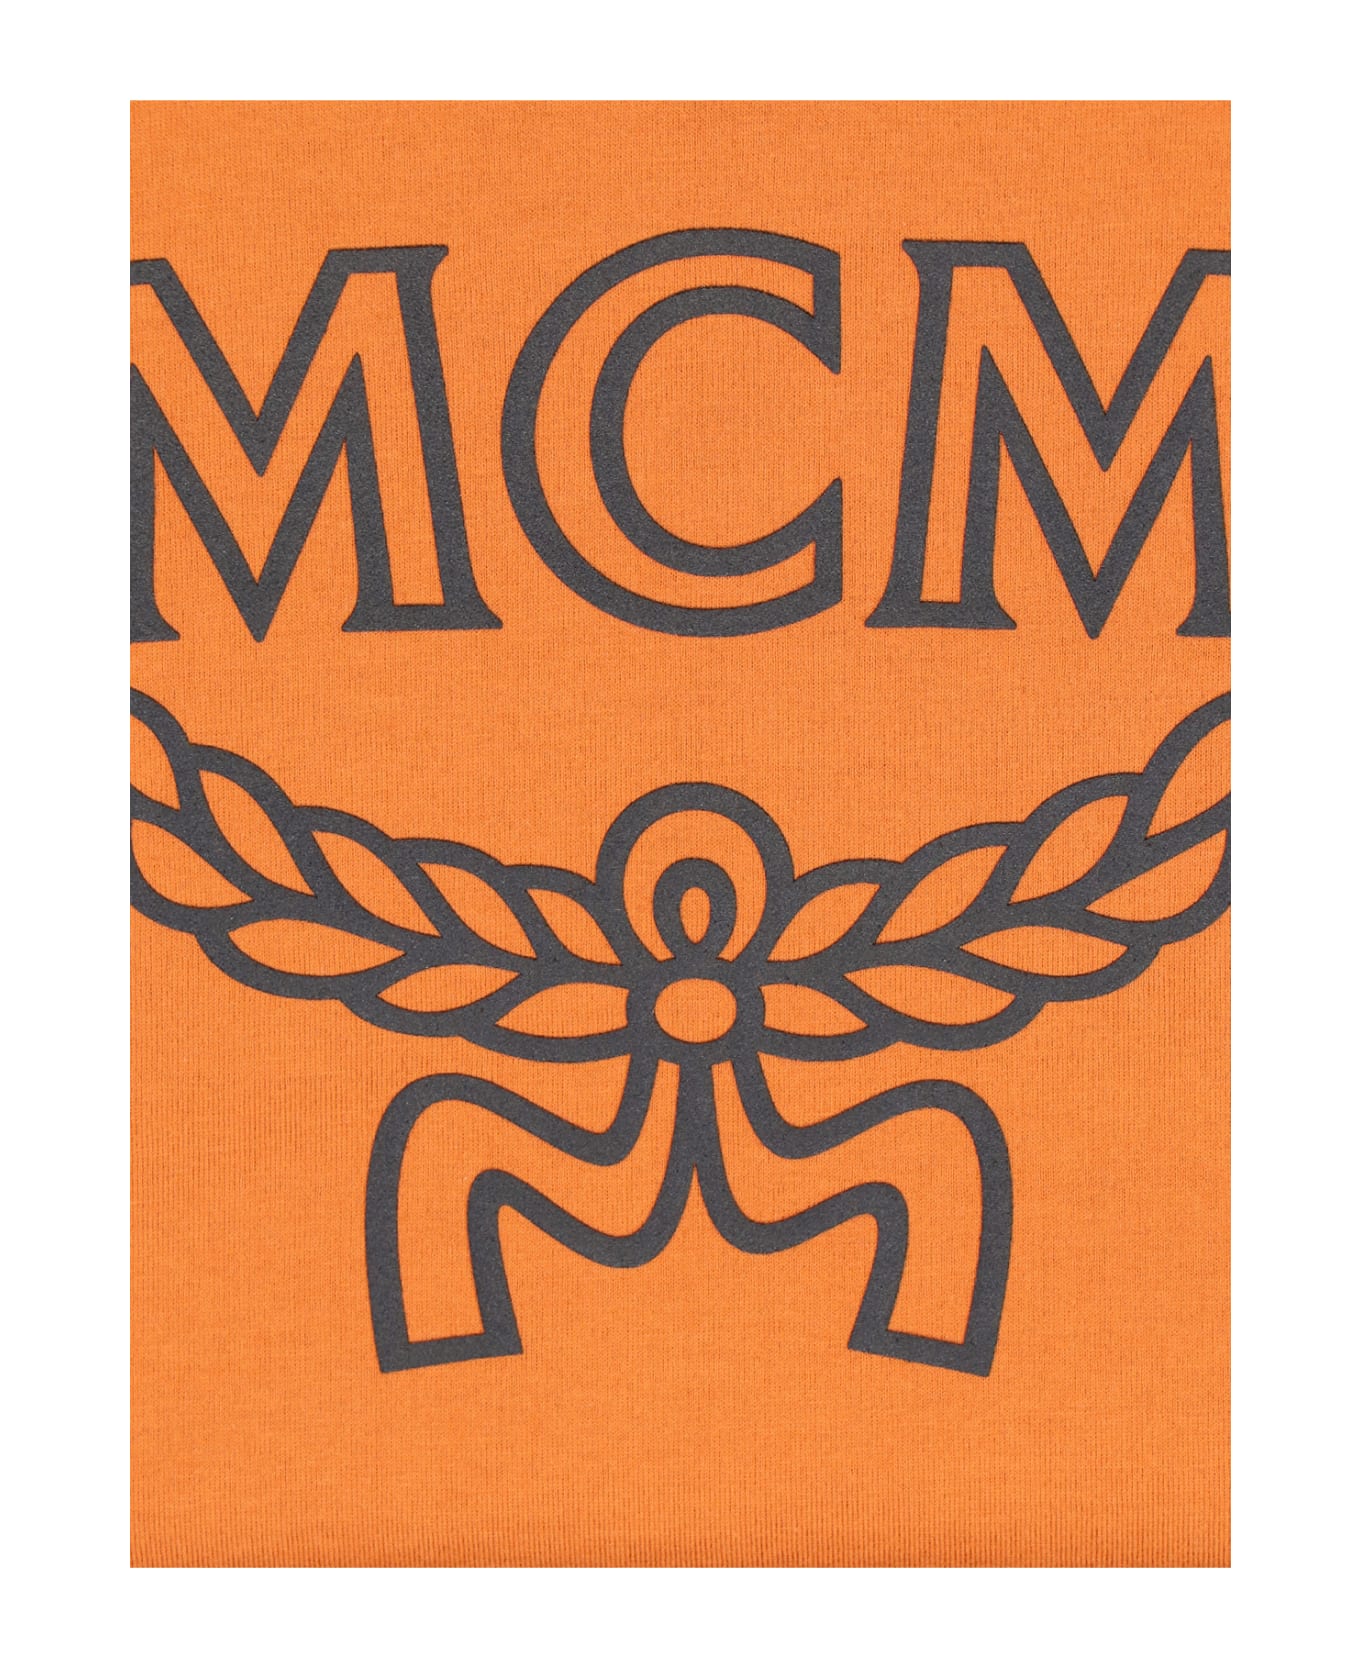 MCM Logo T-shirt - Brown Tシャツ